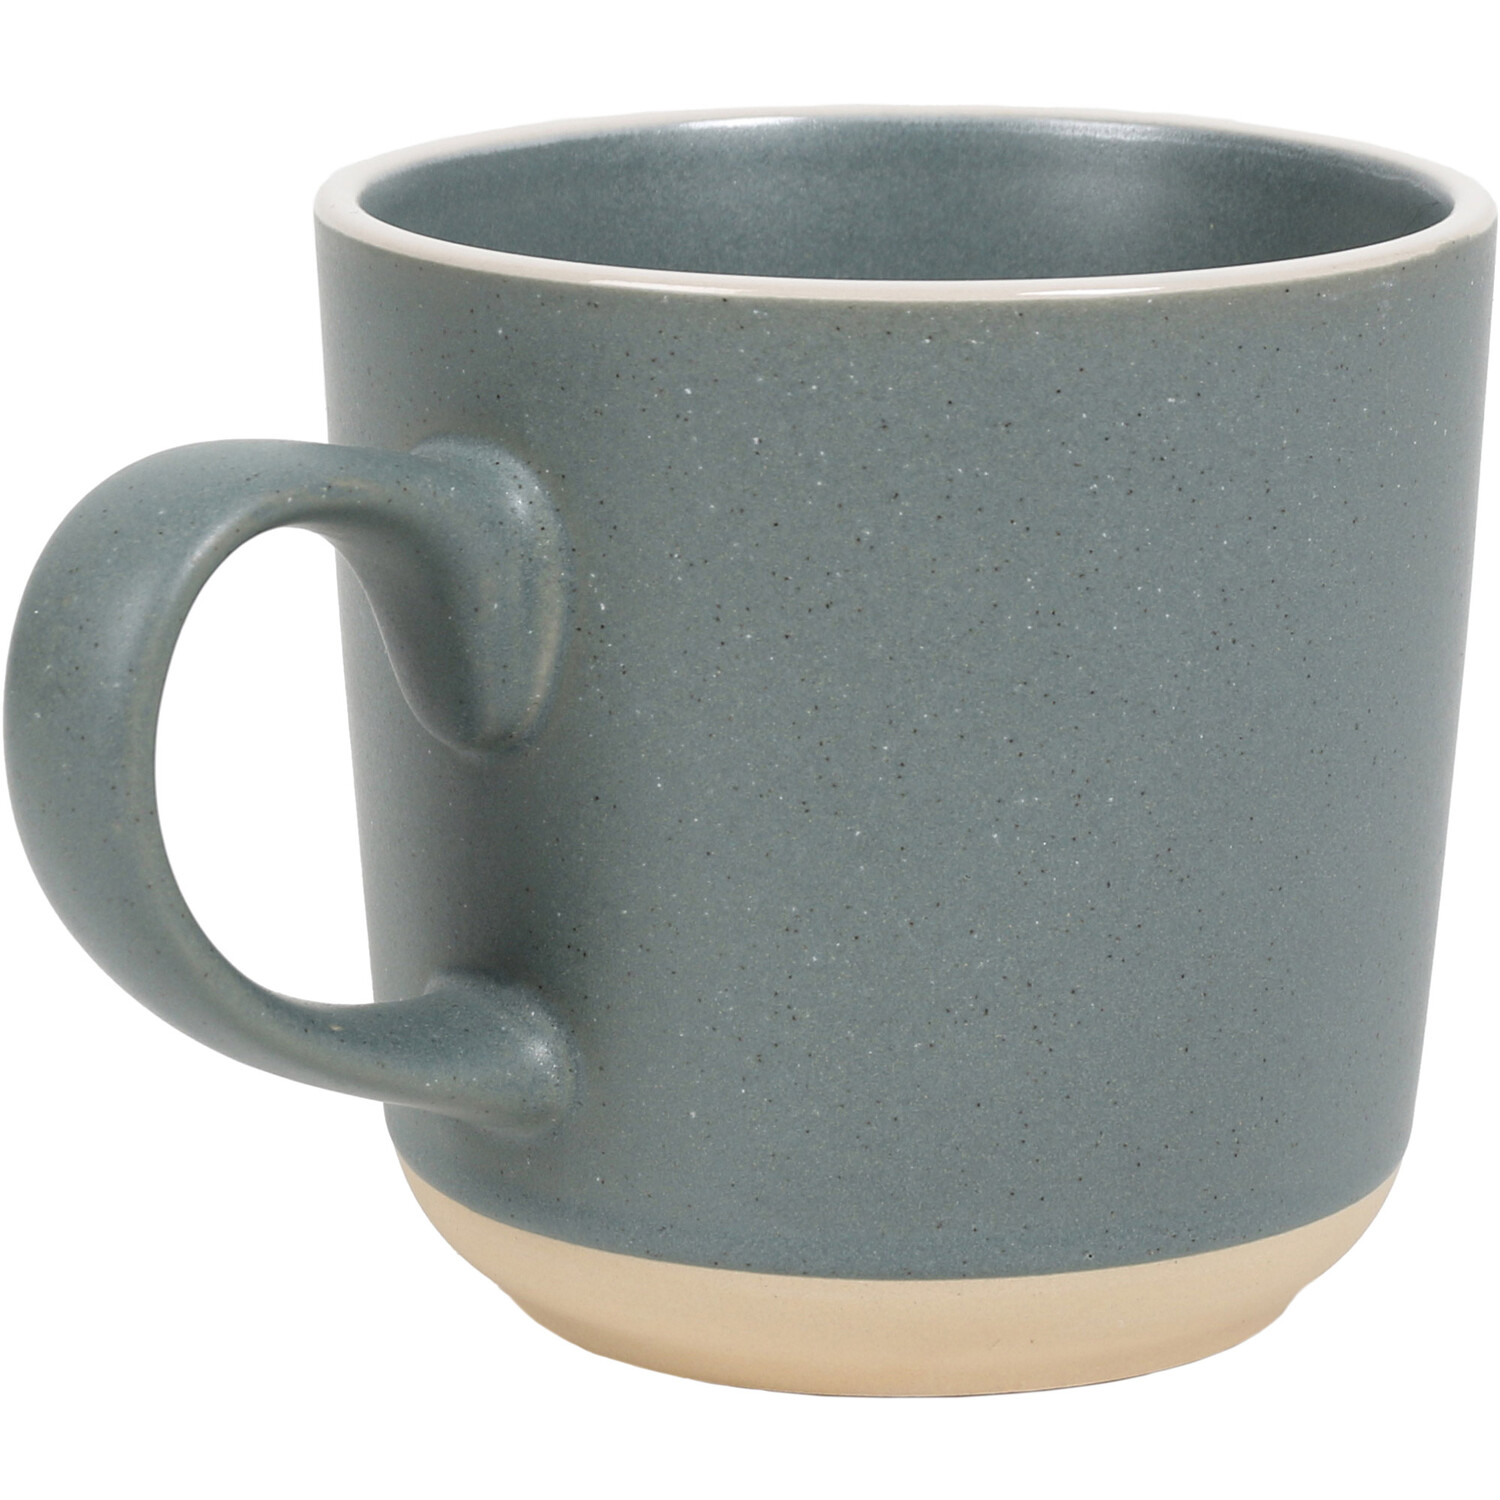 Stoneware Mug with Natural Base Image 1